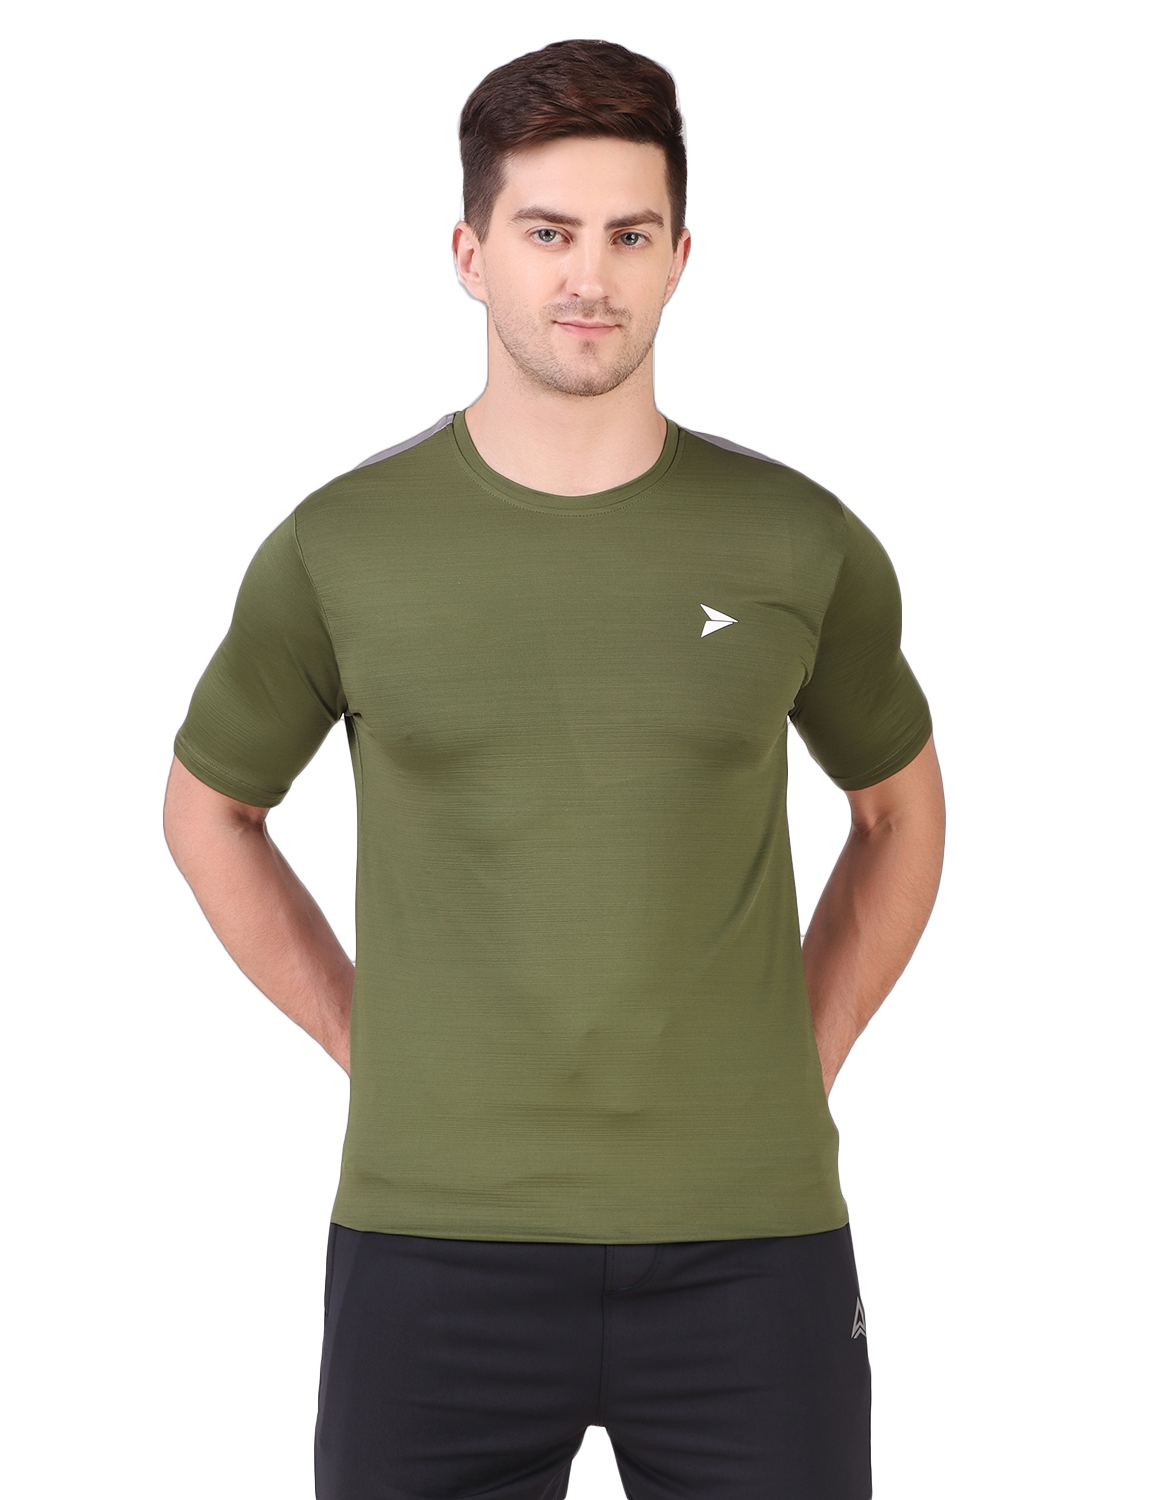 Fitinc Men's Round Neck Slimfit Gym & Active Sports Olive T-Shirt